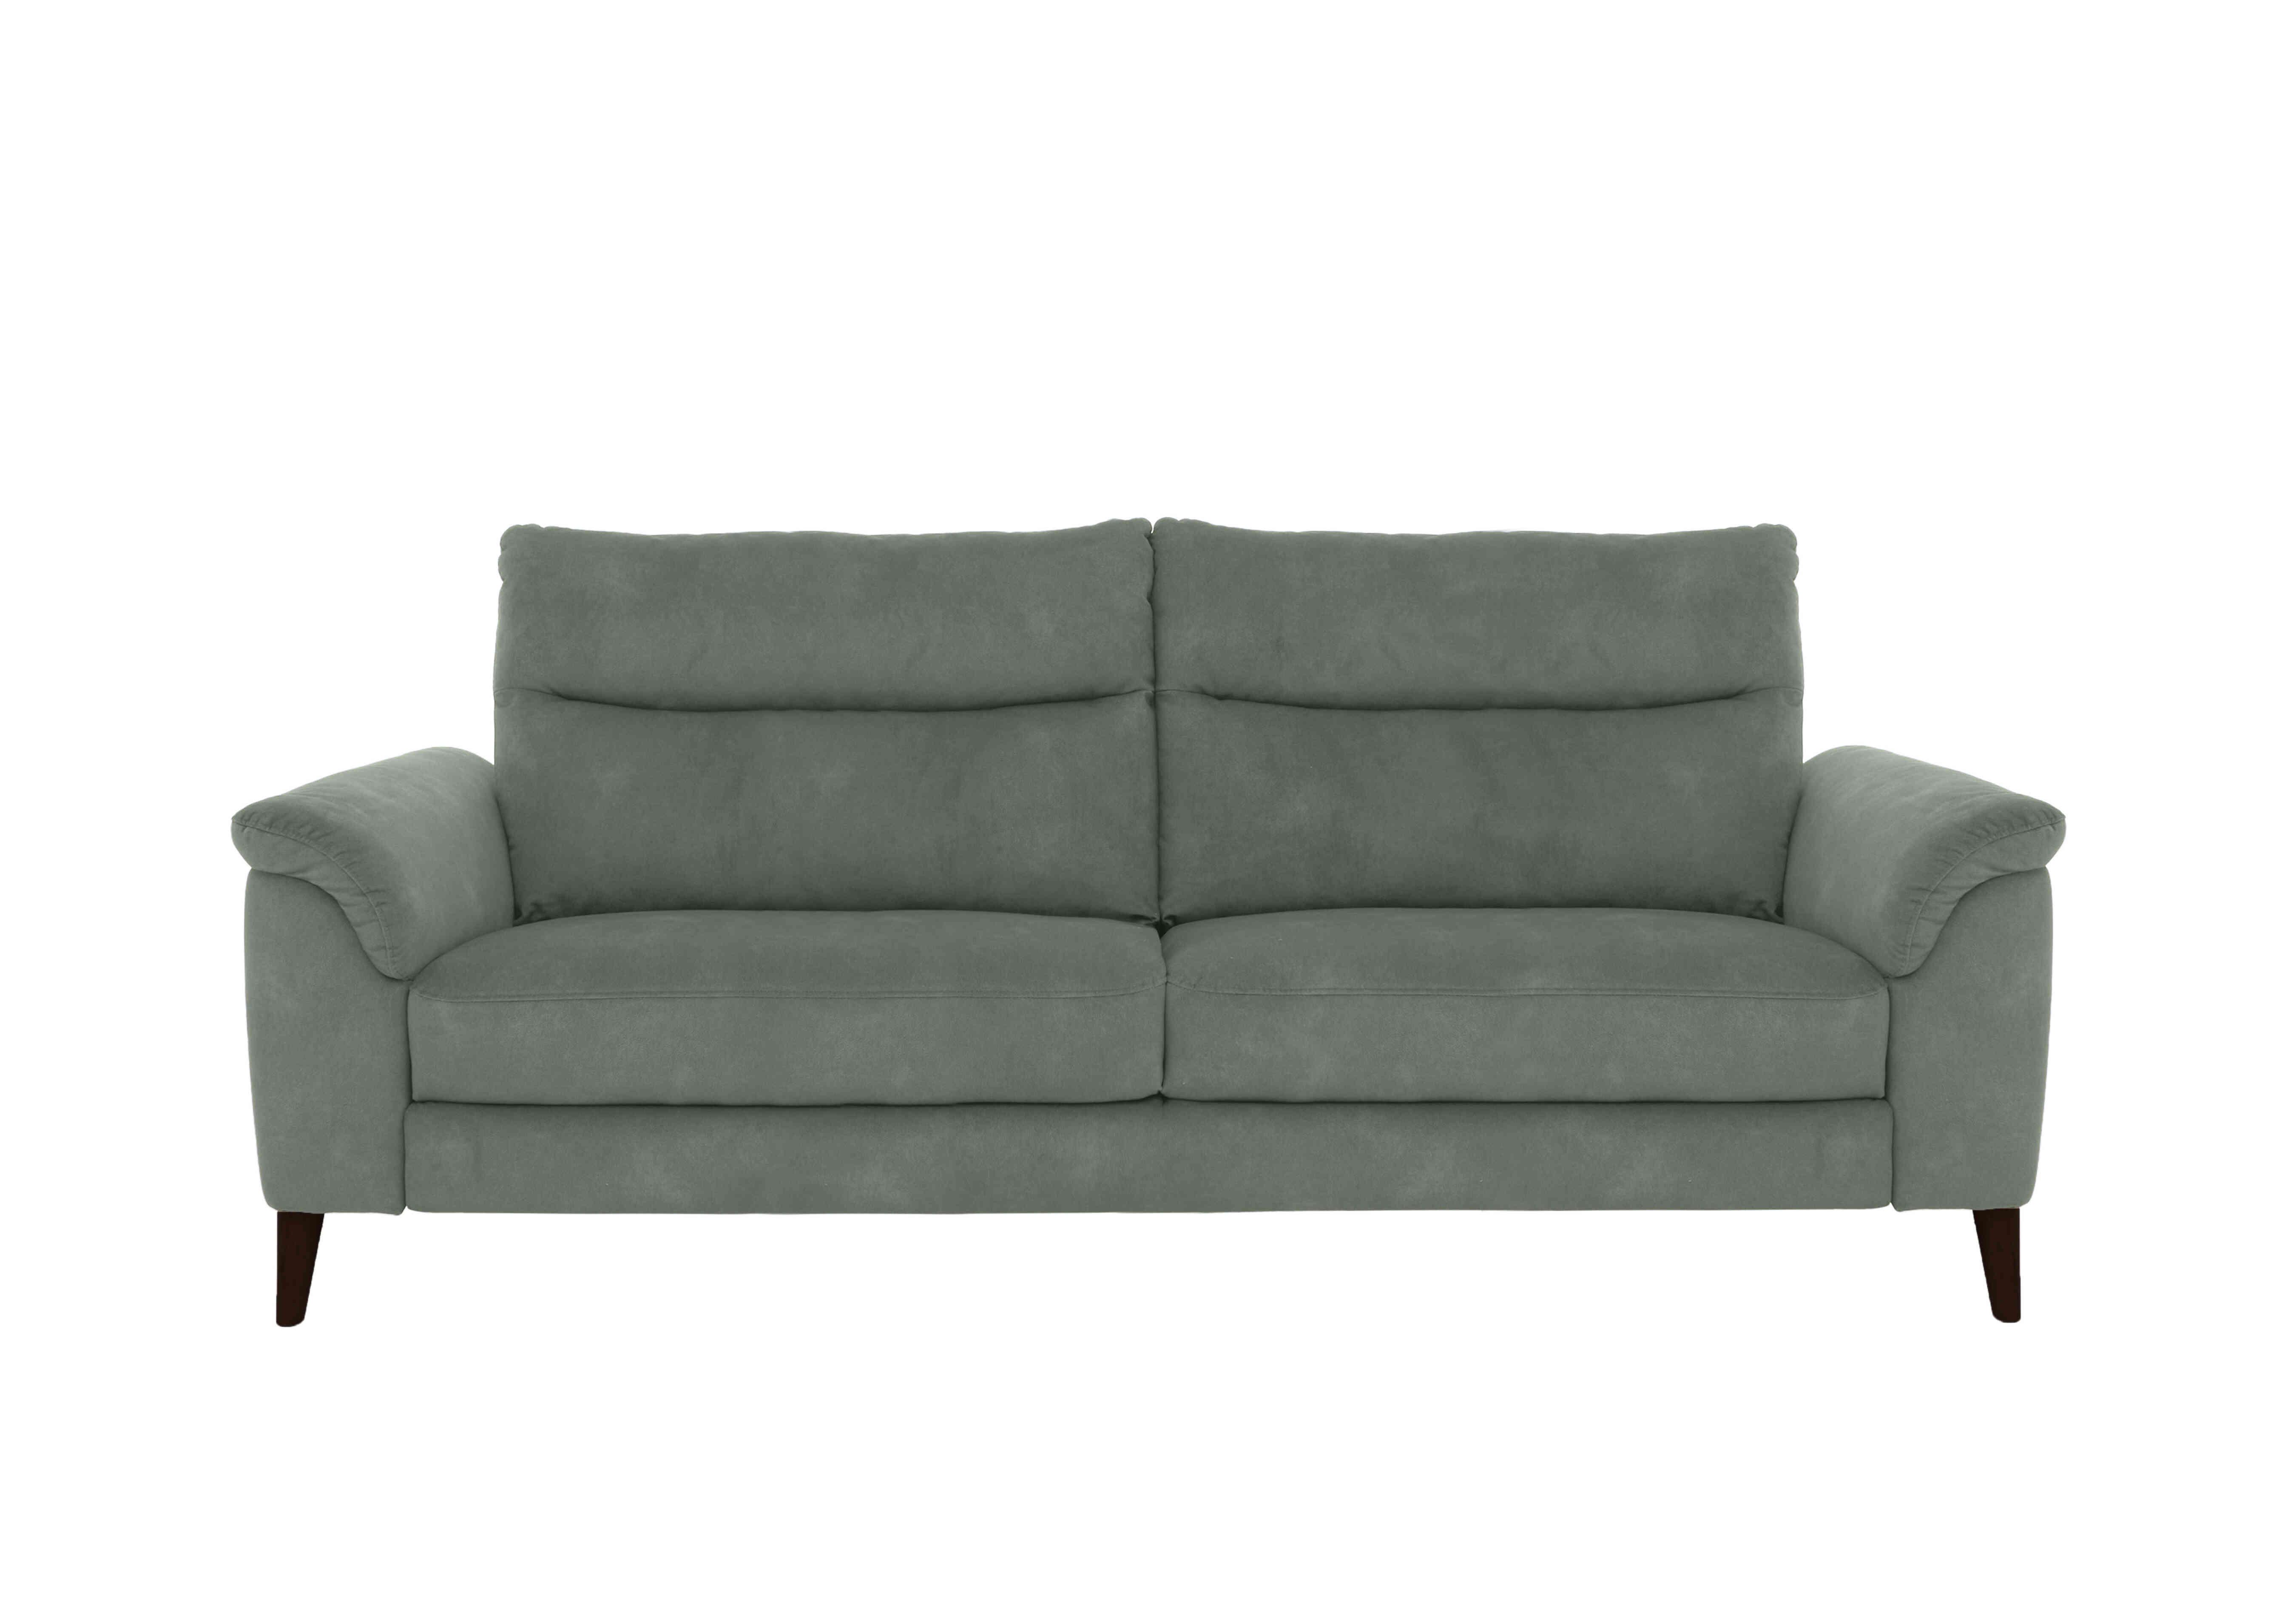 Morgan 3 Seater Fabric Sofa in Fern Dexter 14 43514 on Furniture Village